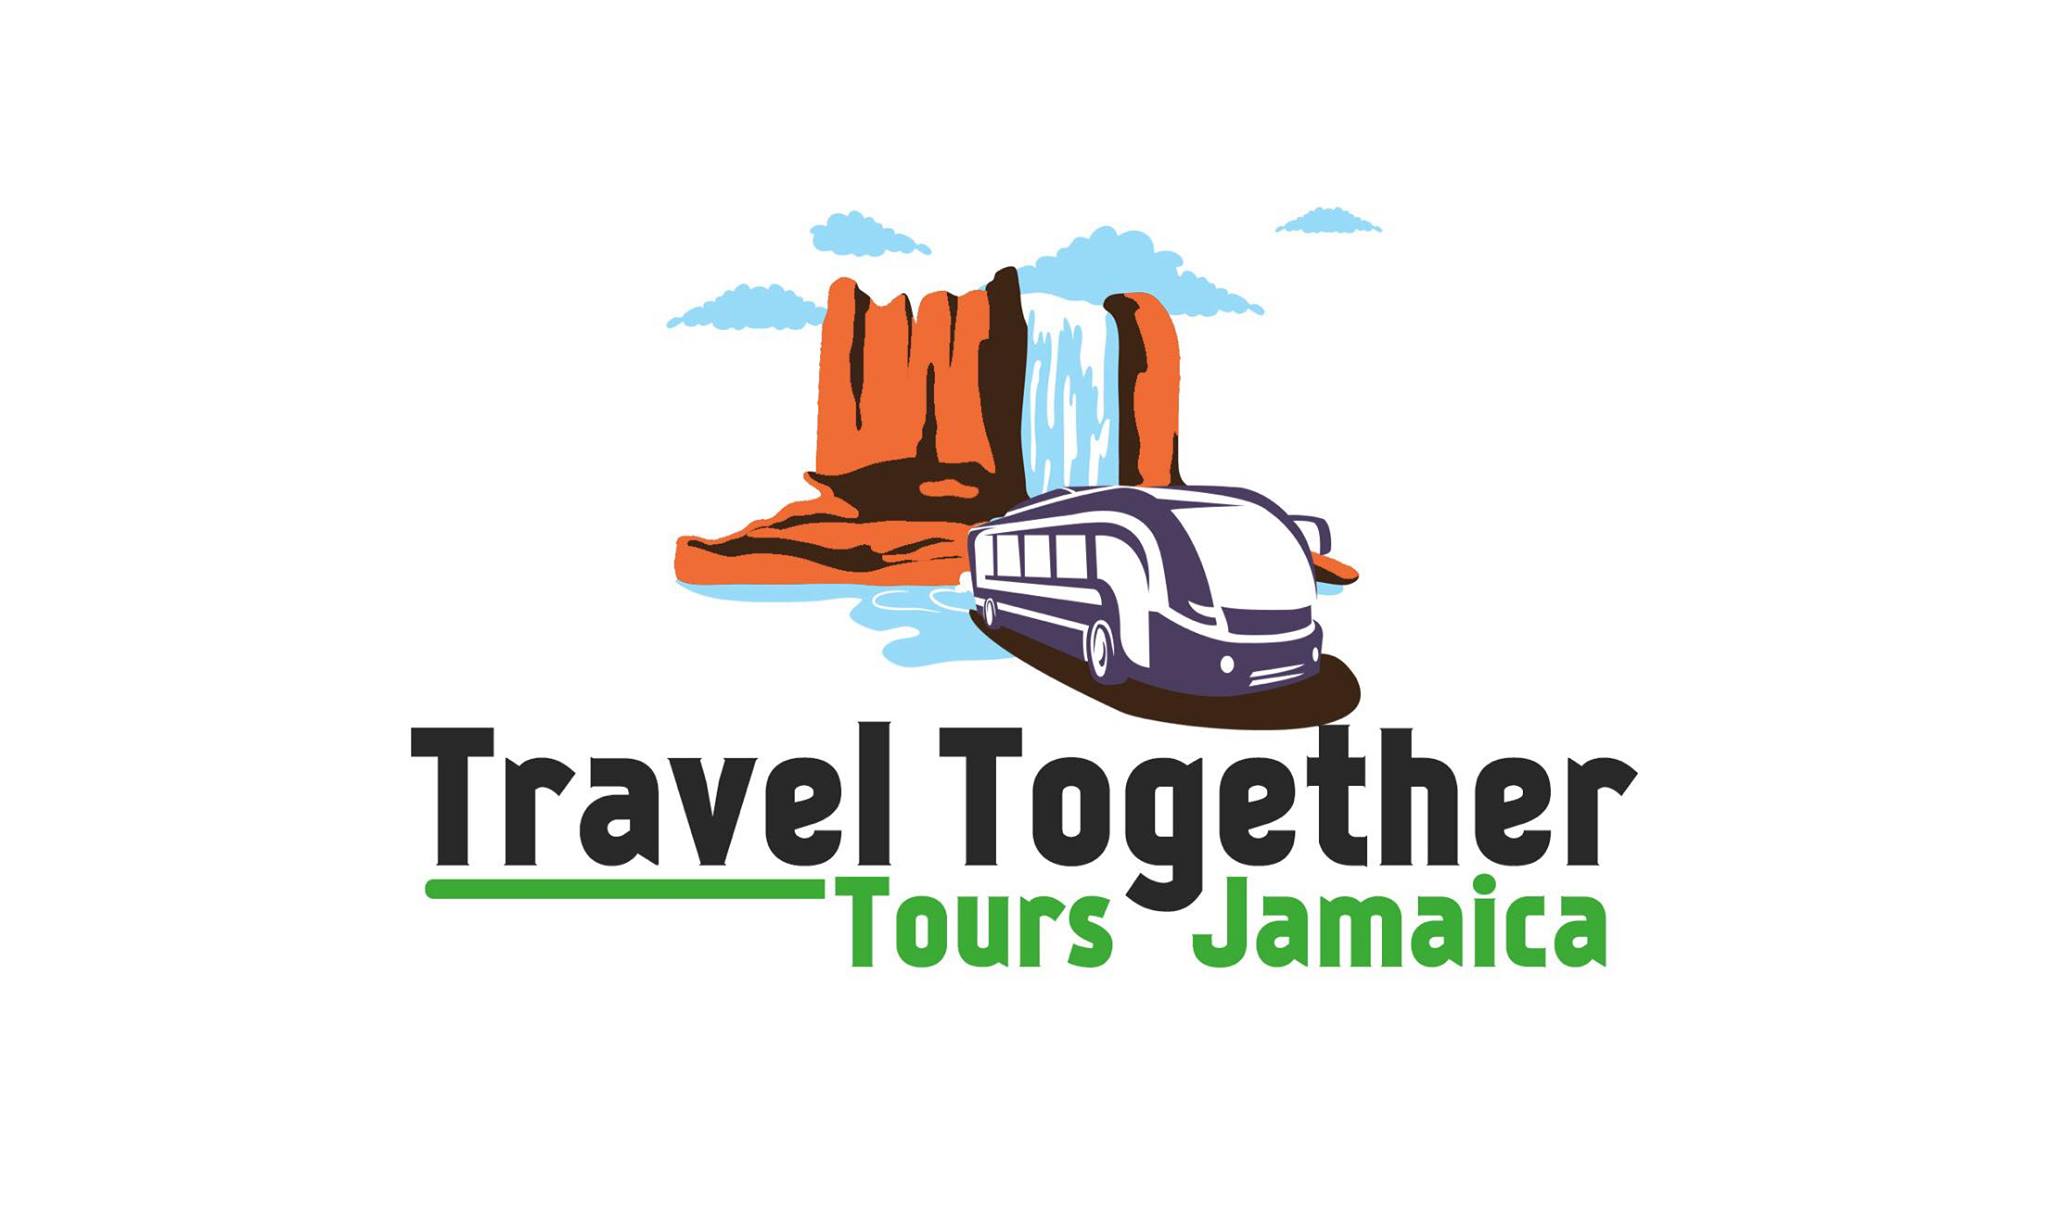 Travel Together Tours Jamaica